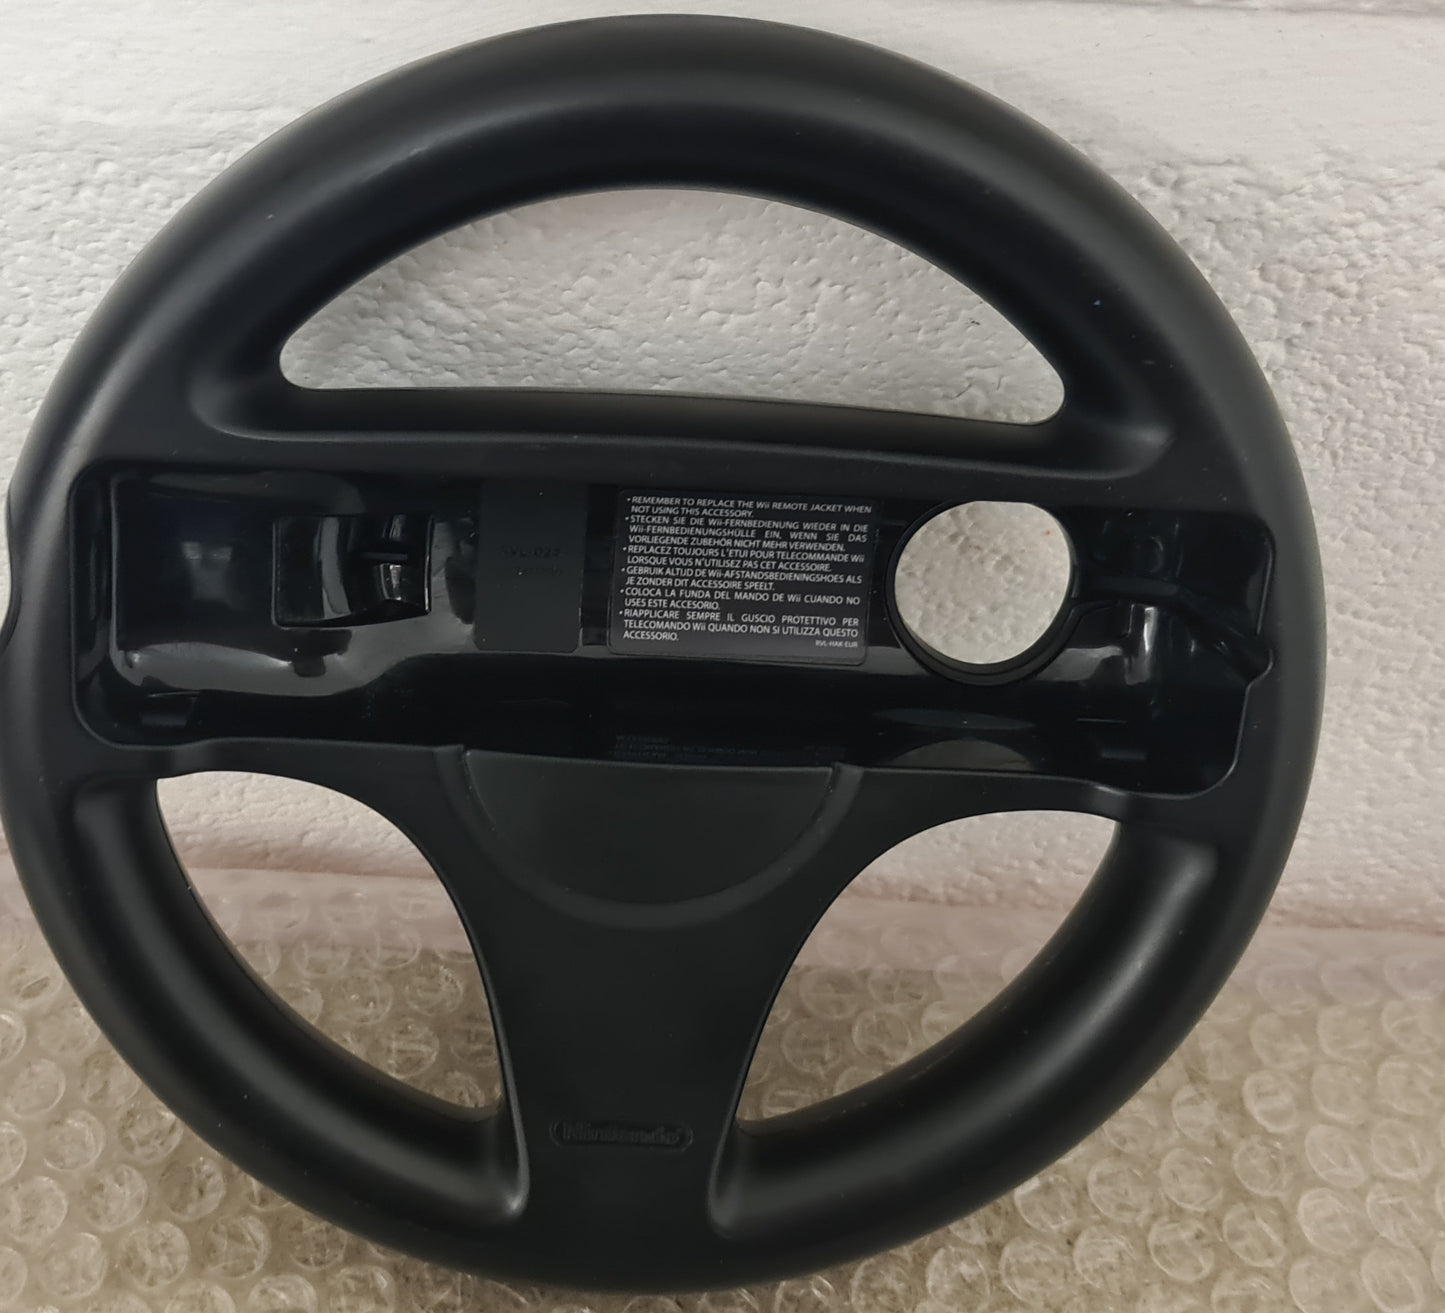 Black Steering Wheel Nintendo Wii Accessory